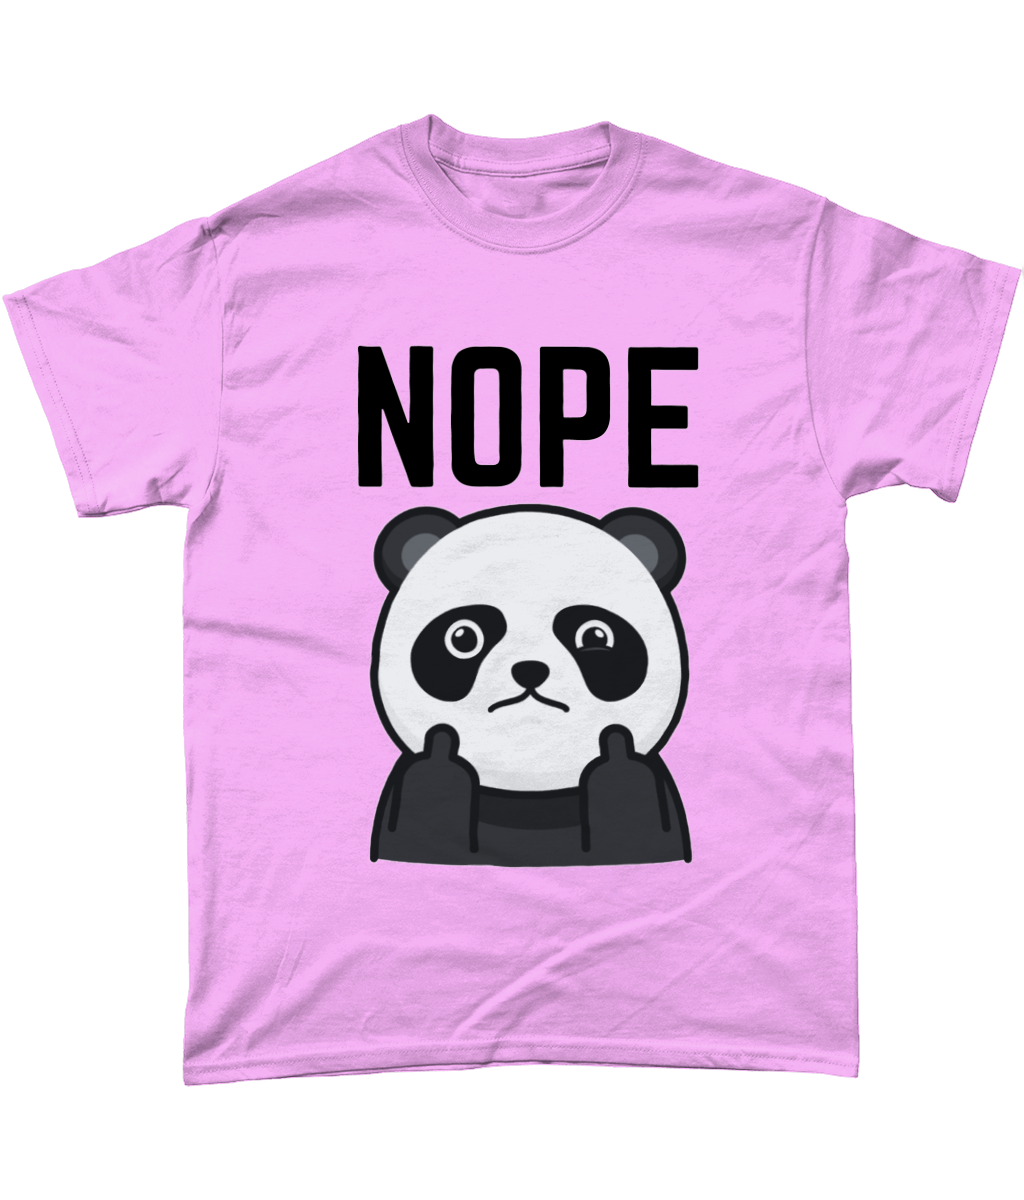 Nope swearing middle fingers panda t-shirt